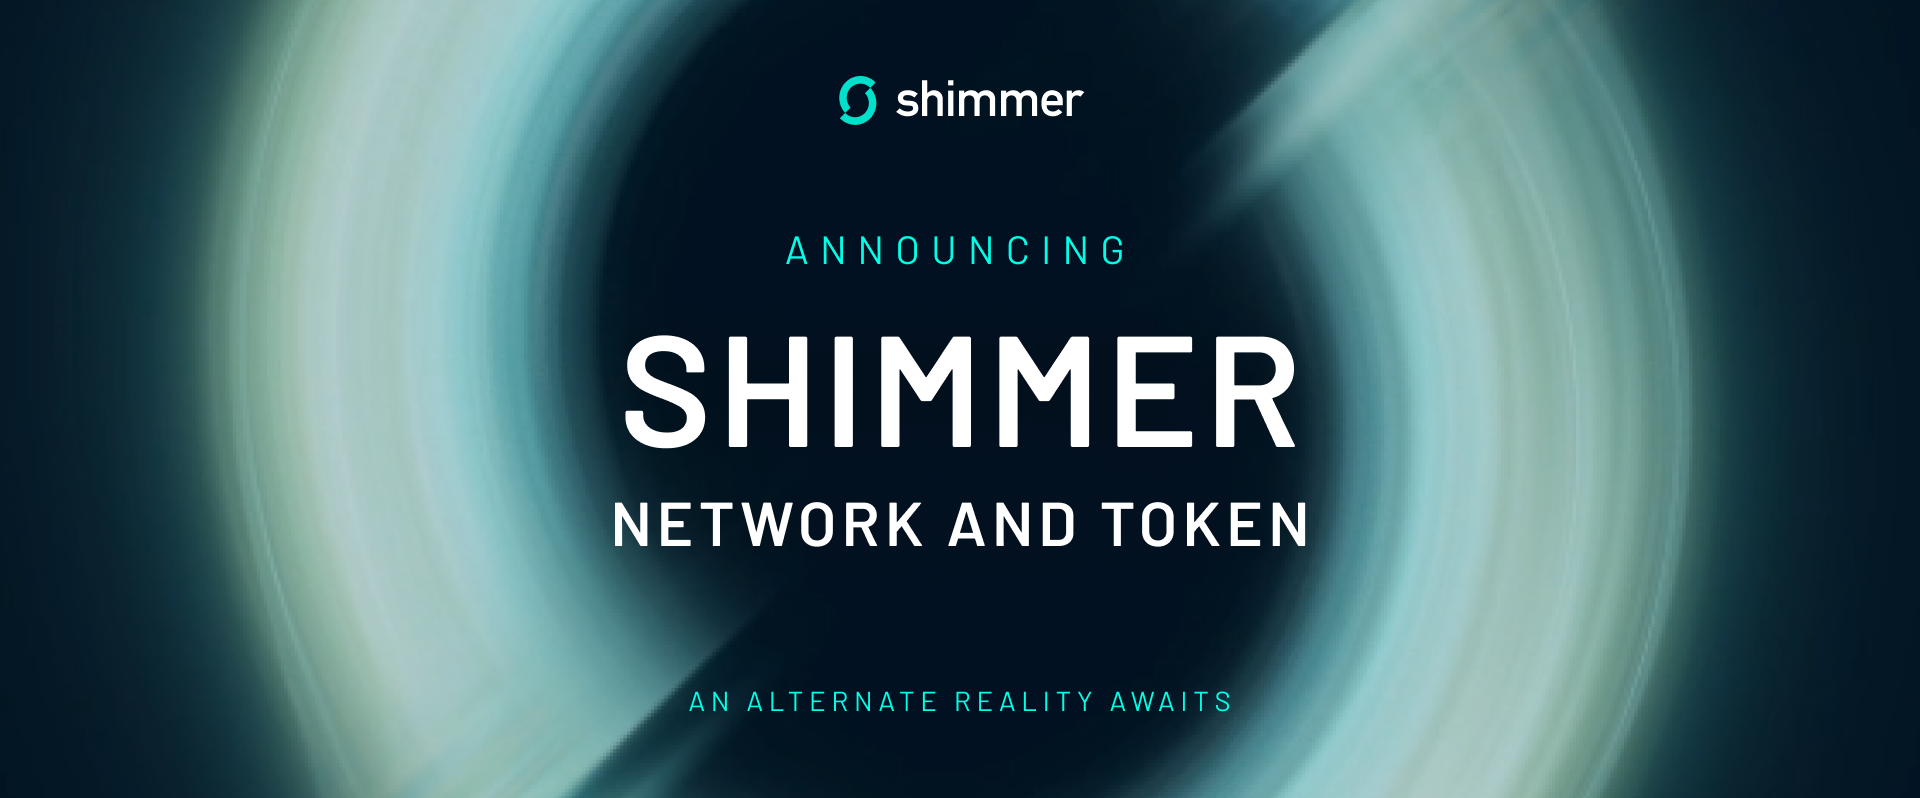 blog.shimmer.network